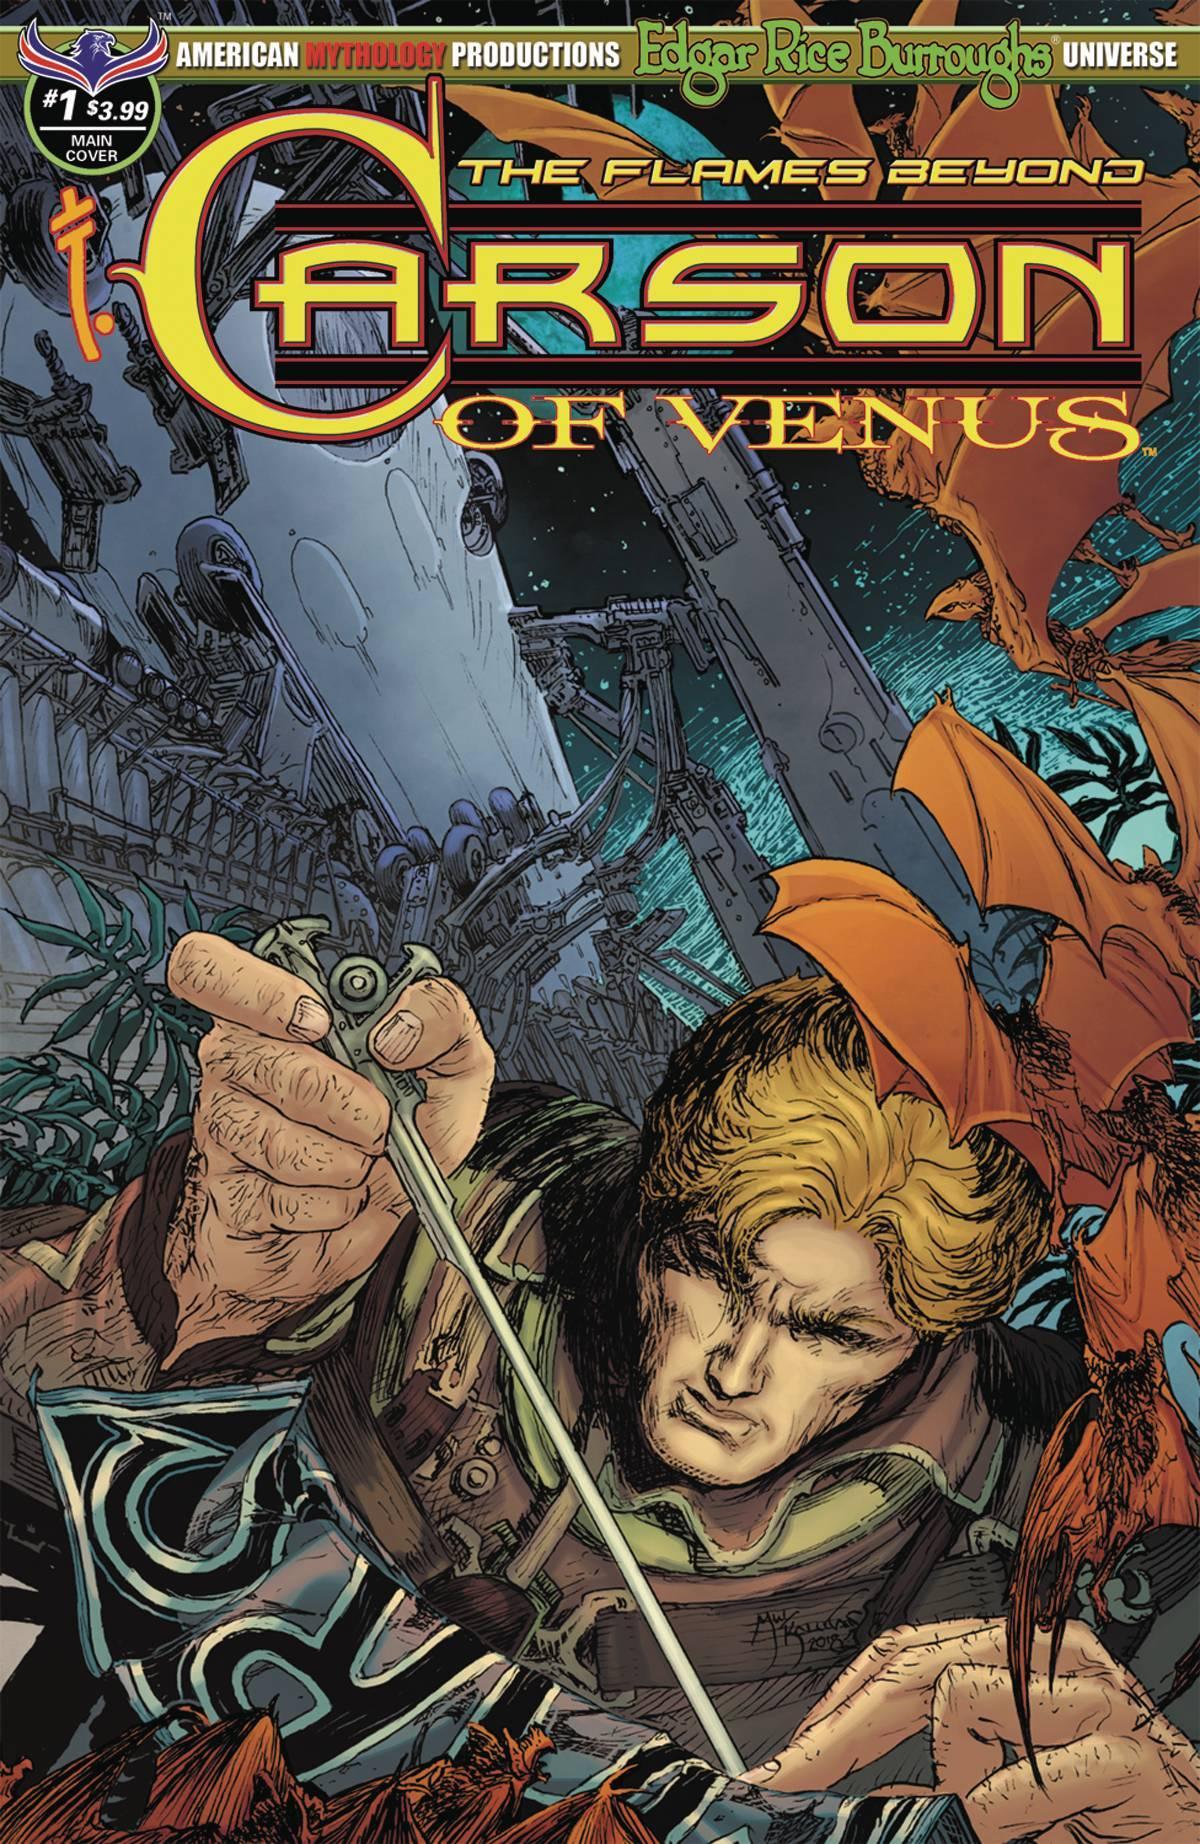 CARSON OF VENUS FLAMES BEYOND #1 LEGENDARY KALUTA CVR - Kings Comics